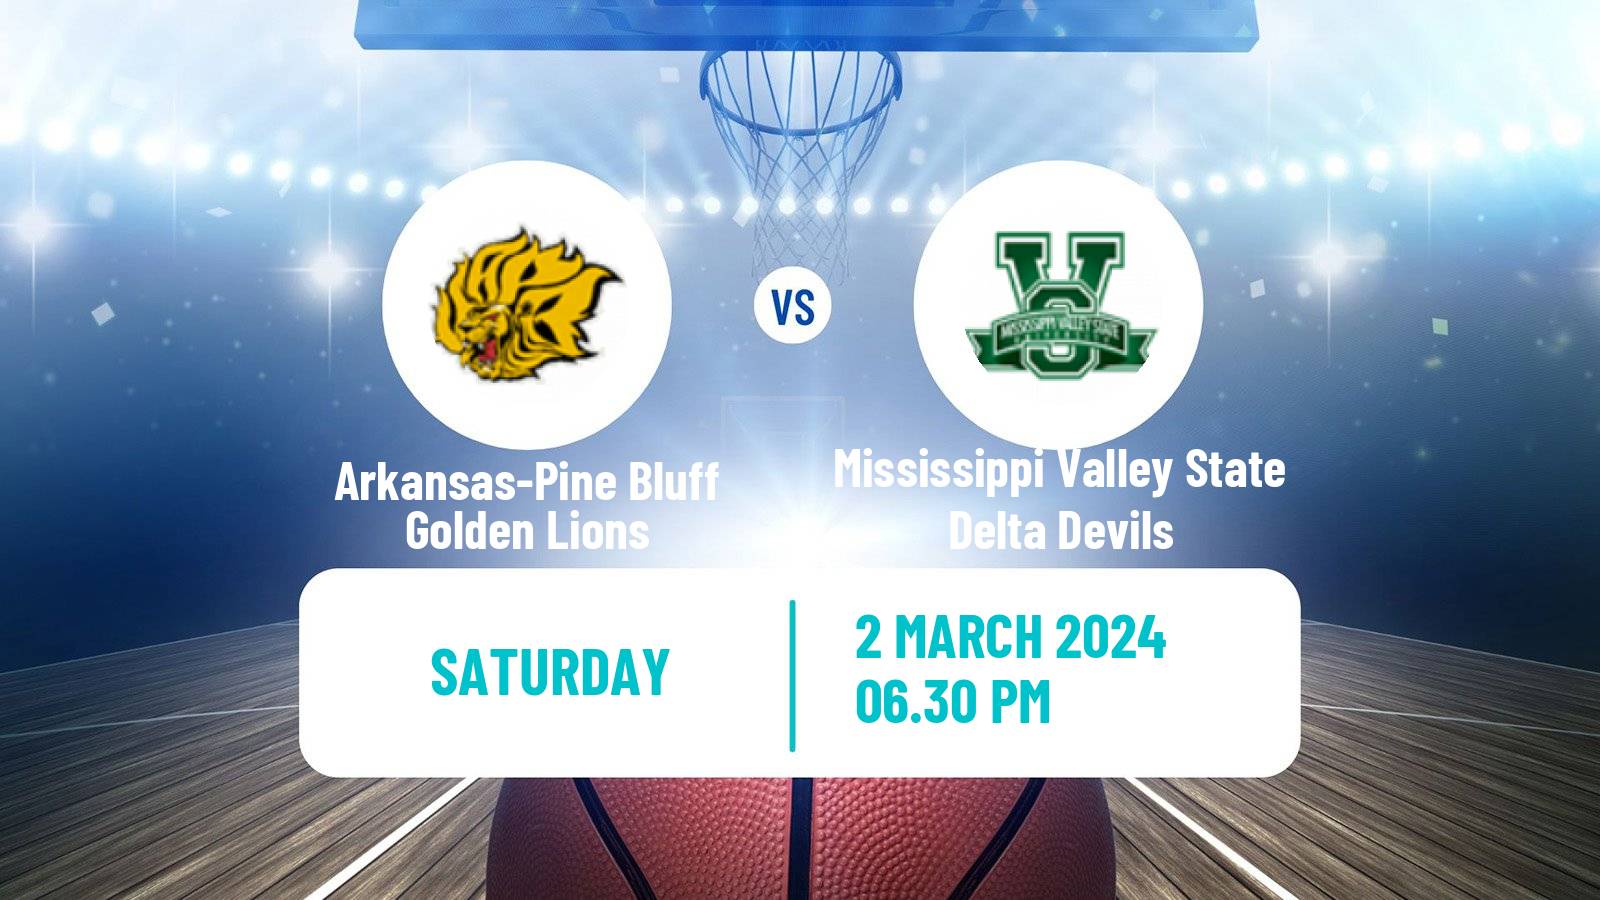 Basketball NCAA College Basketball Arkansas-Pine Bluff Golden Lions - Mississippi Valley State Delta Devils